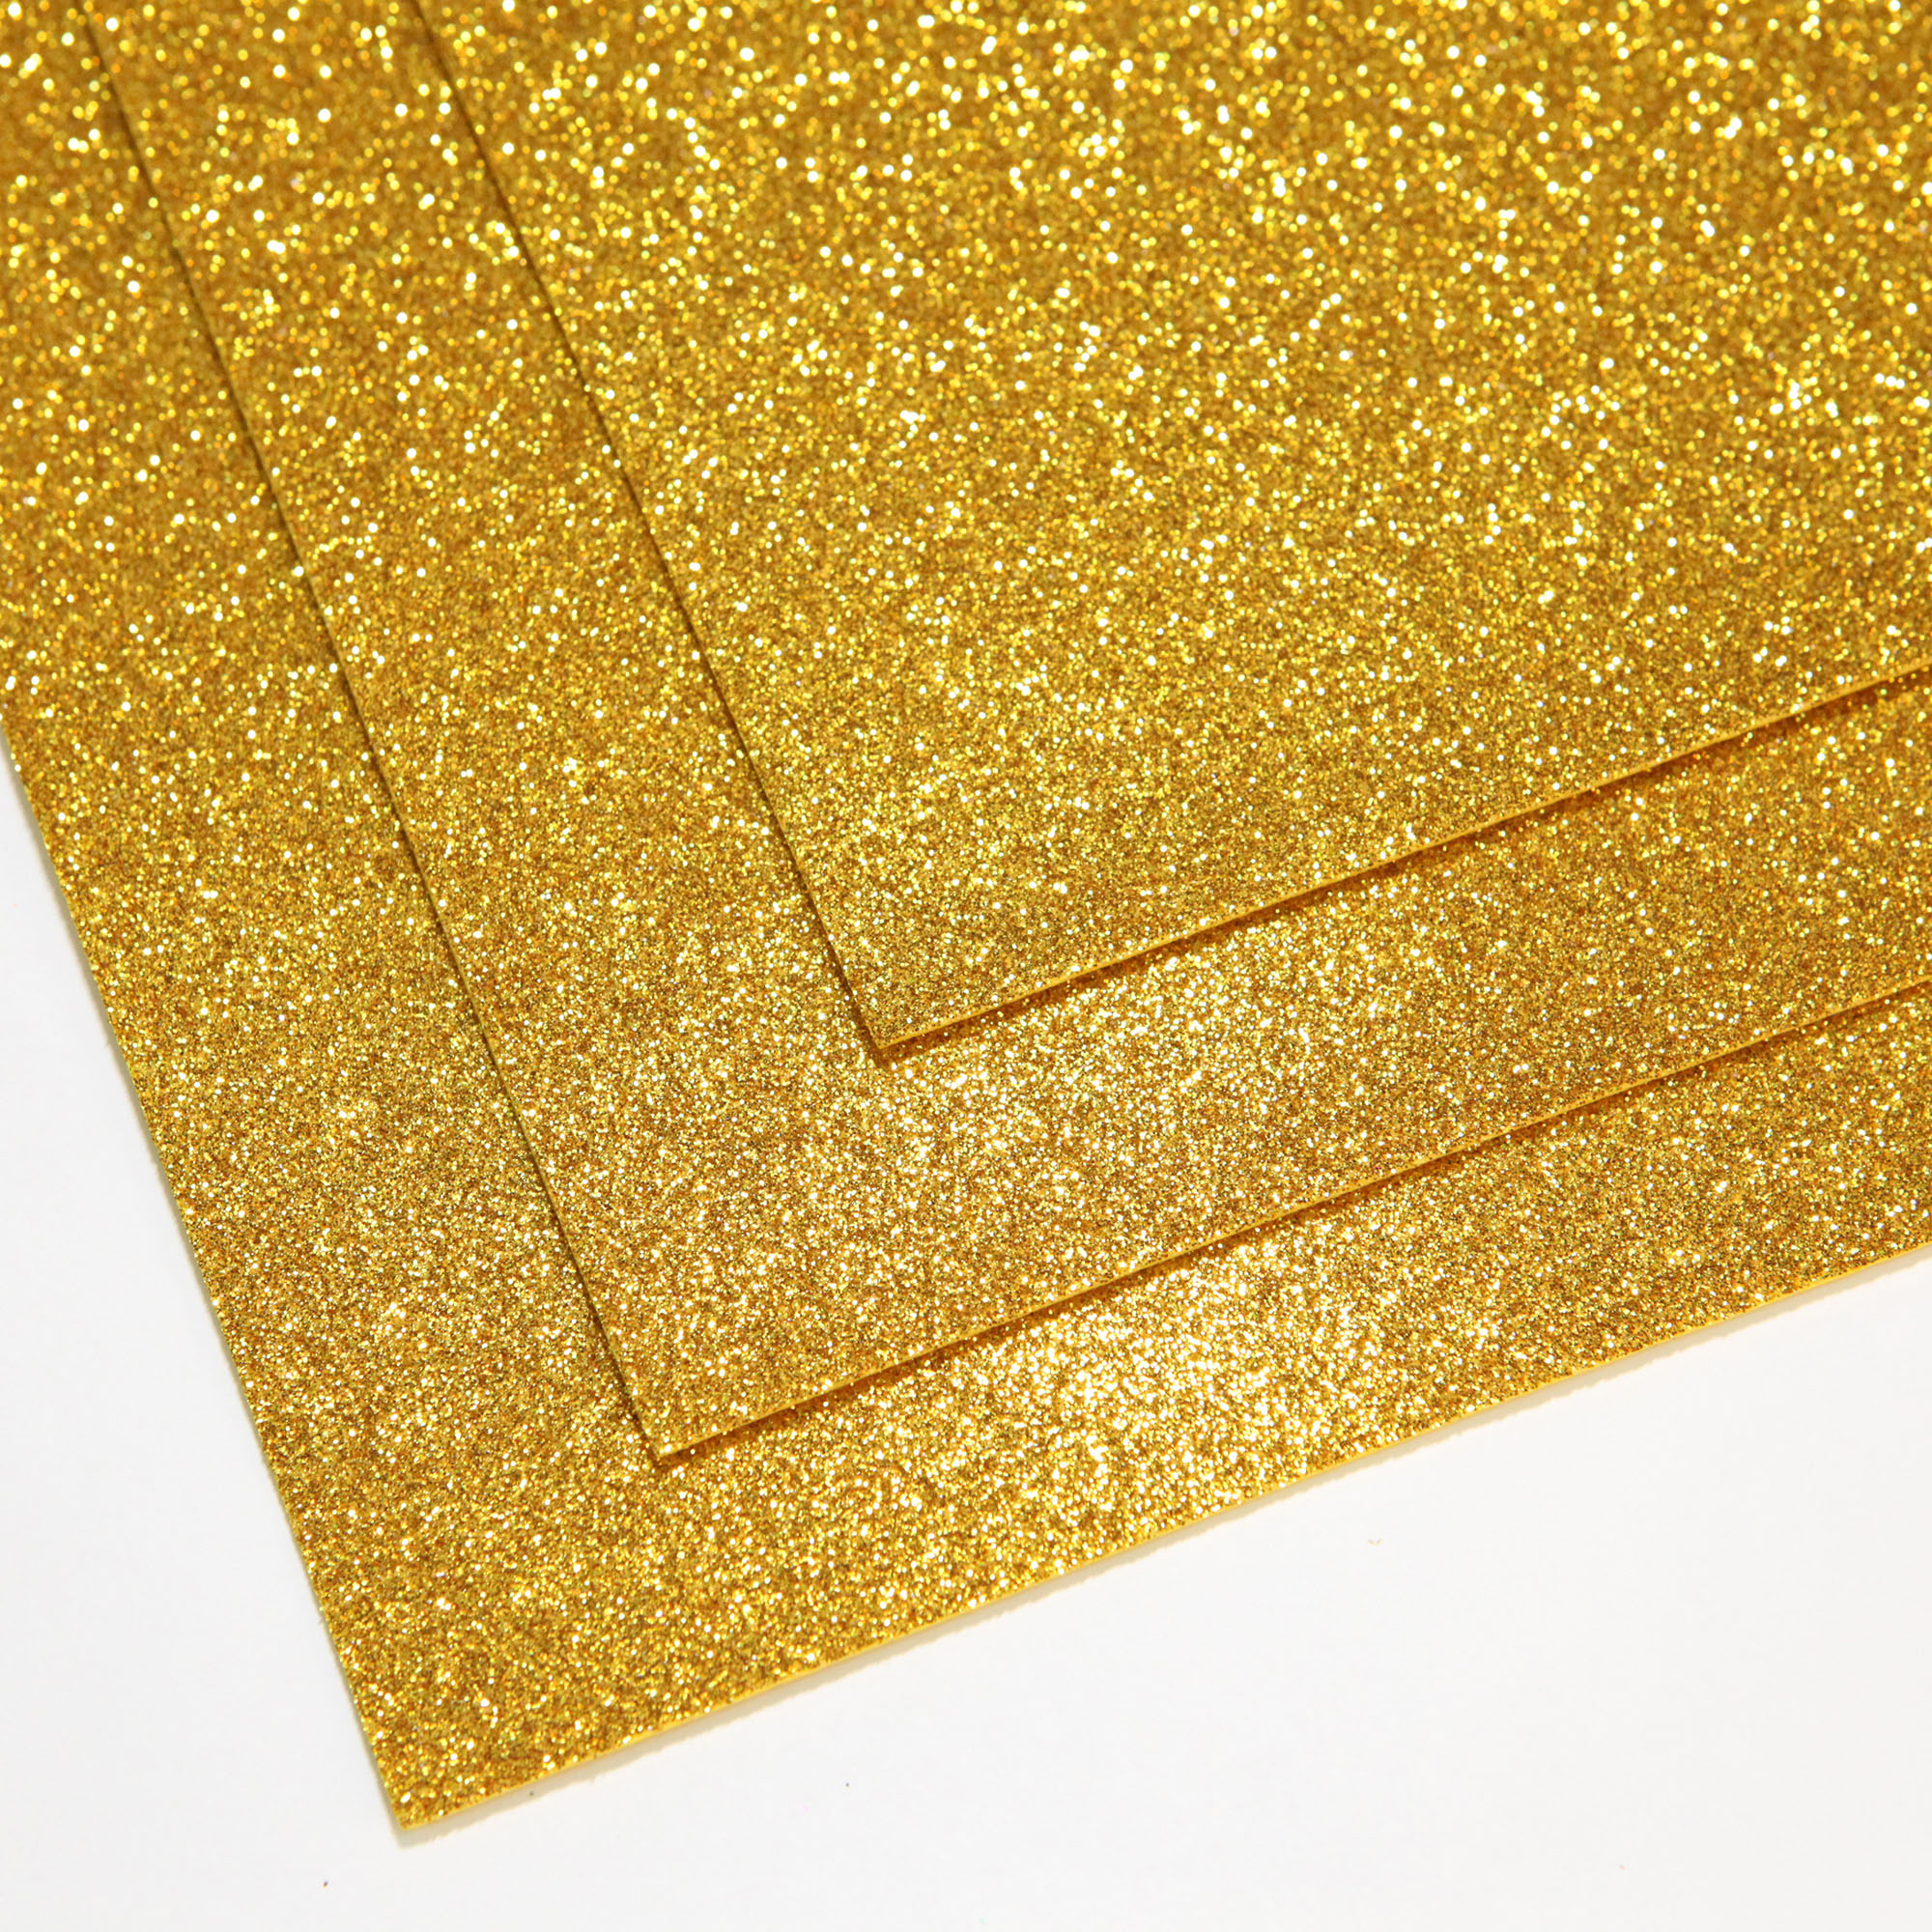 VR-FE4 40T13-S60X70-HPL48EG052 Glitter Oro giallo-Желтое золото Фоамиран глиттер 1.5мм 60x70см. 10 л-пач. 